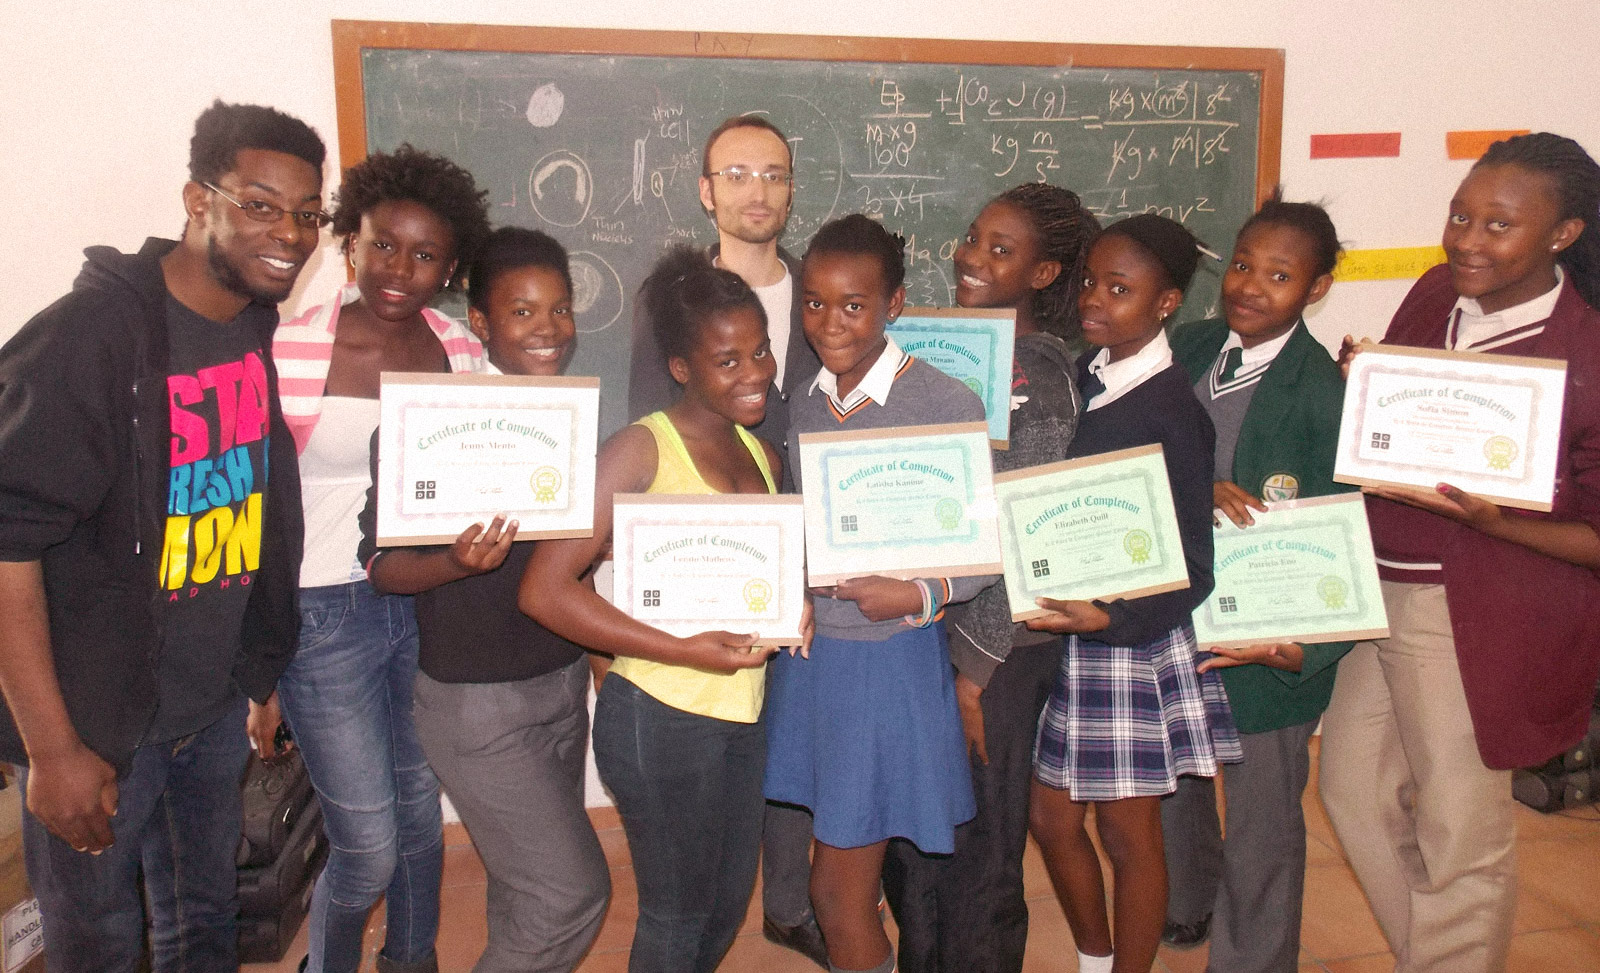 ICT - girls who code got certificates